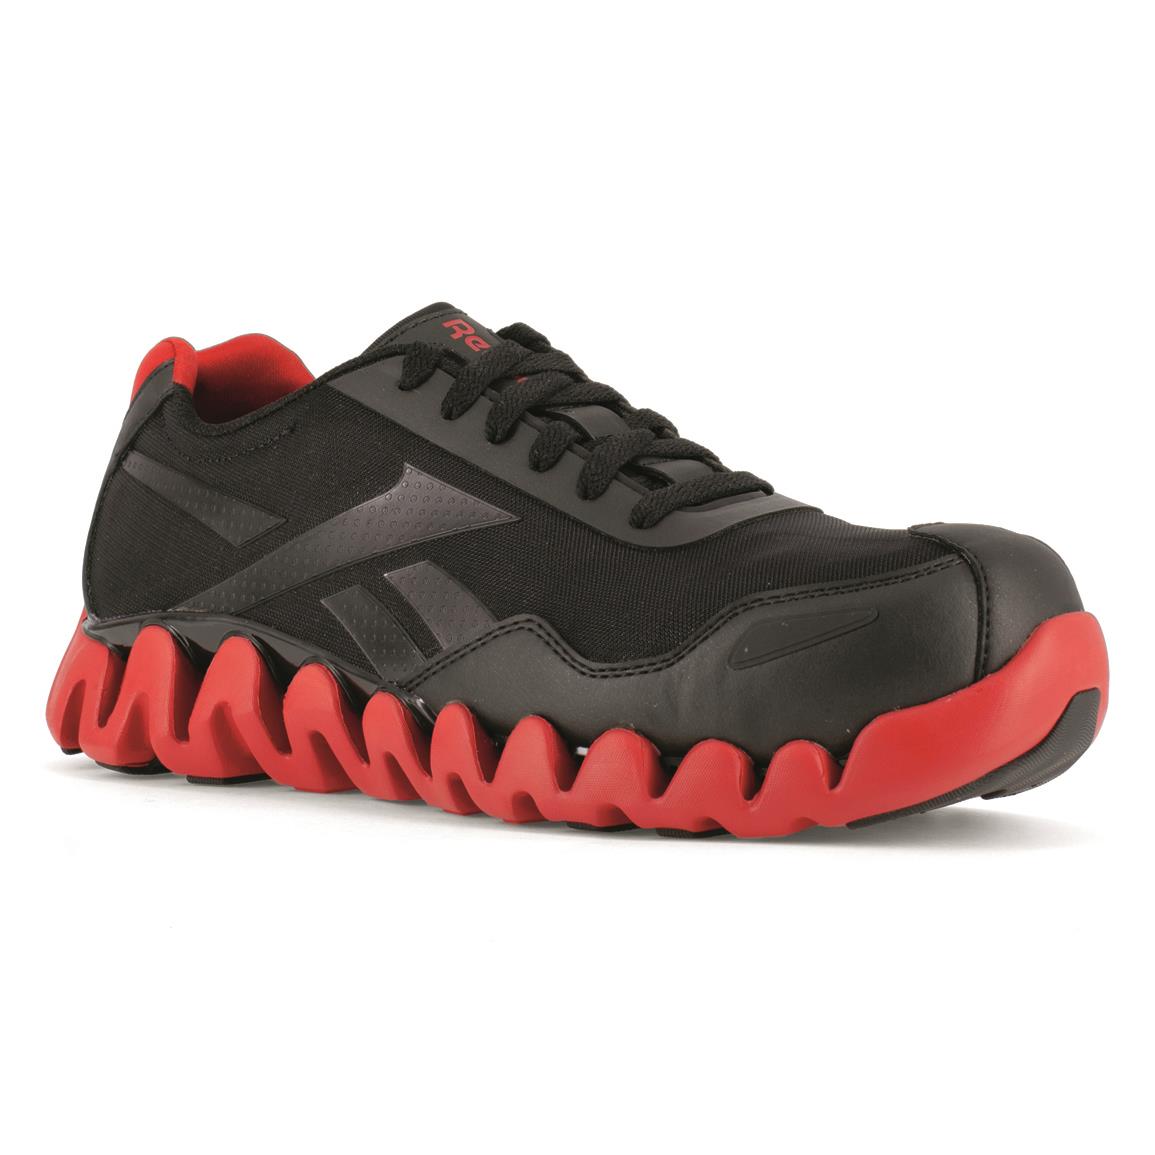 Reebok Men's Zig Pulse Comp Toe Athletic Work Shoes, Black/Red